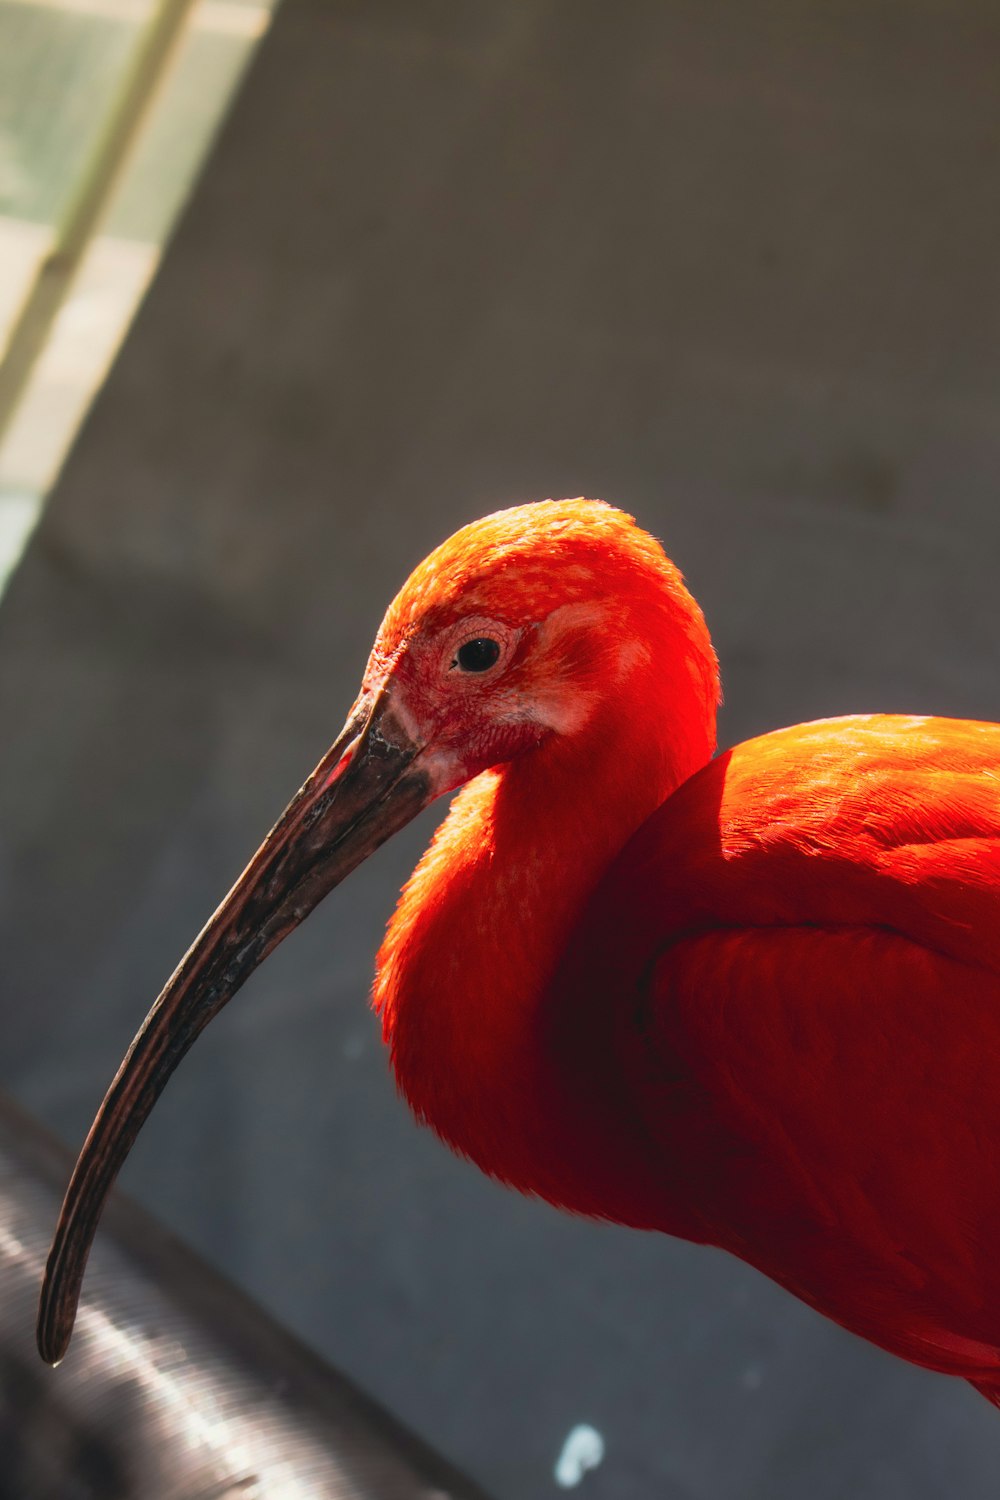 a close up of a red bird with a long beak